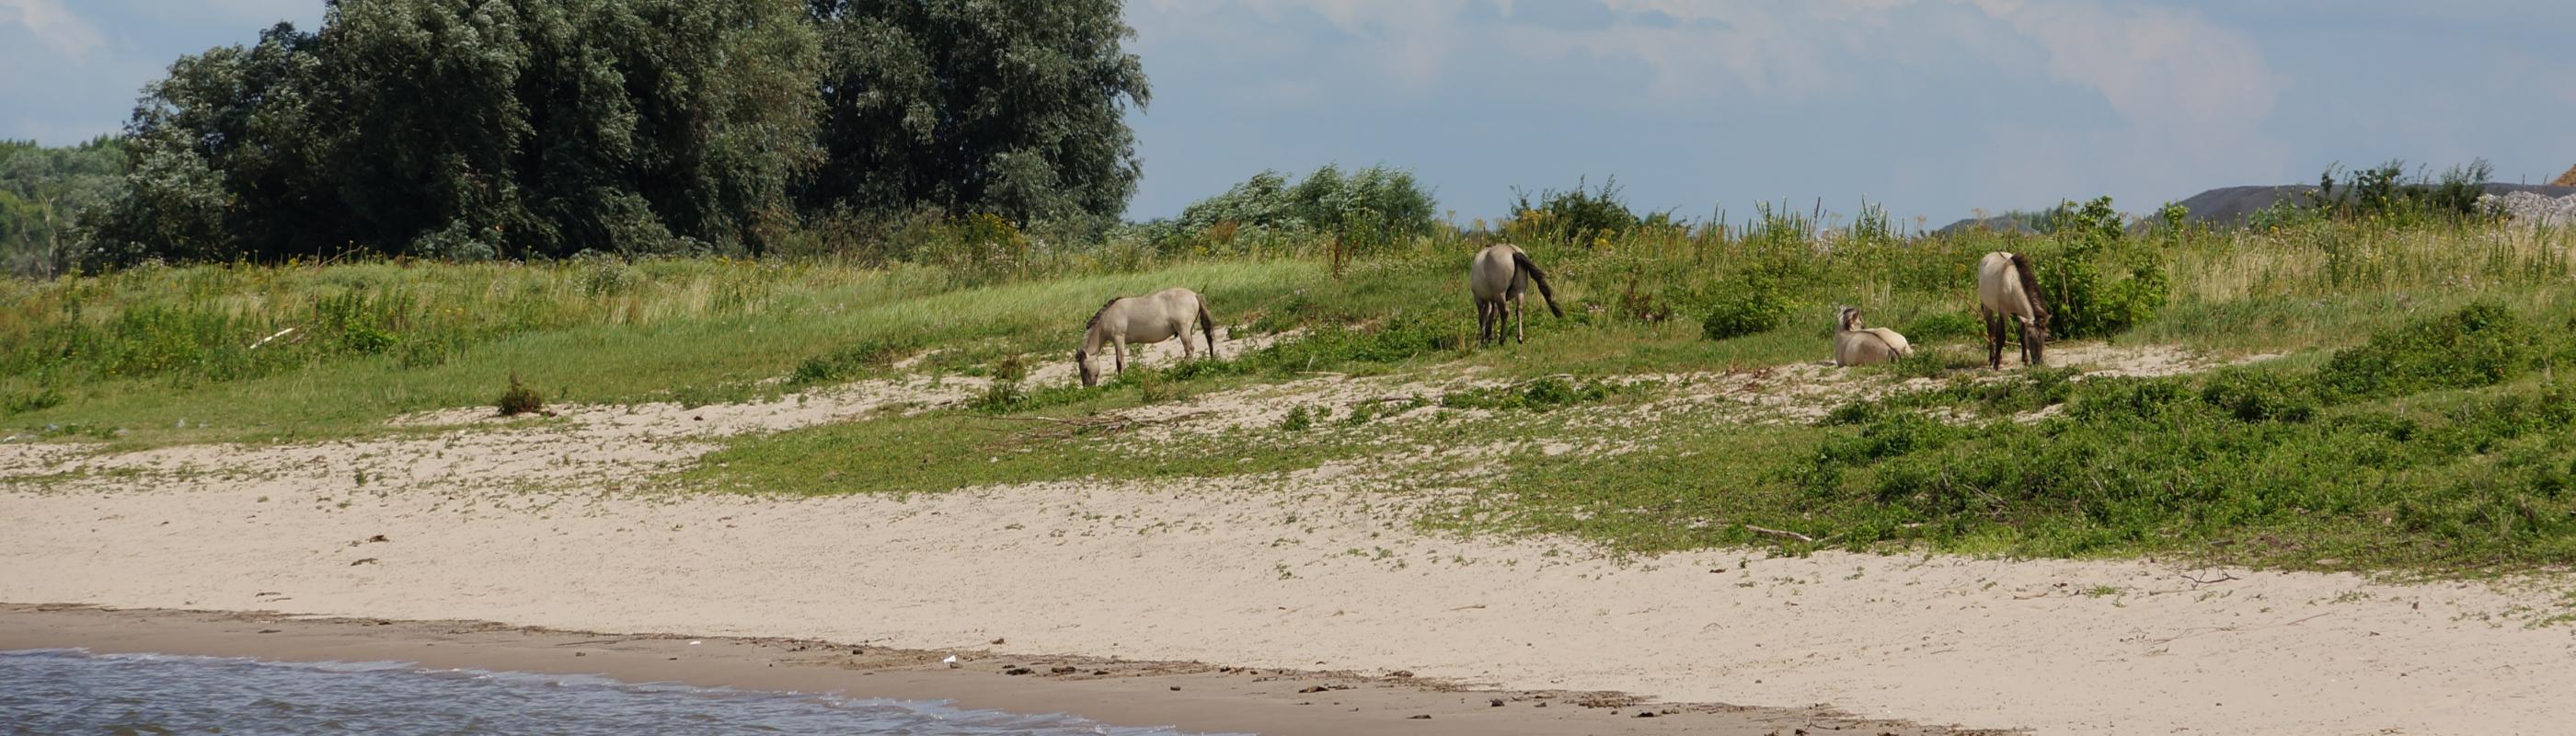 Konikpaarden op rivierduin Millingerwaard, foto: Twan Teunissen